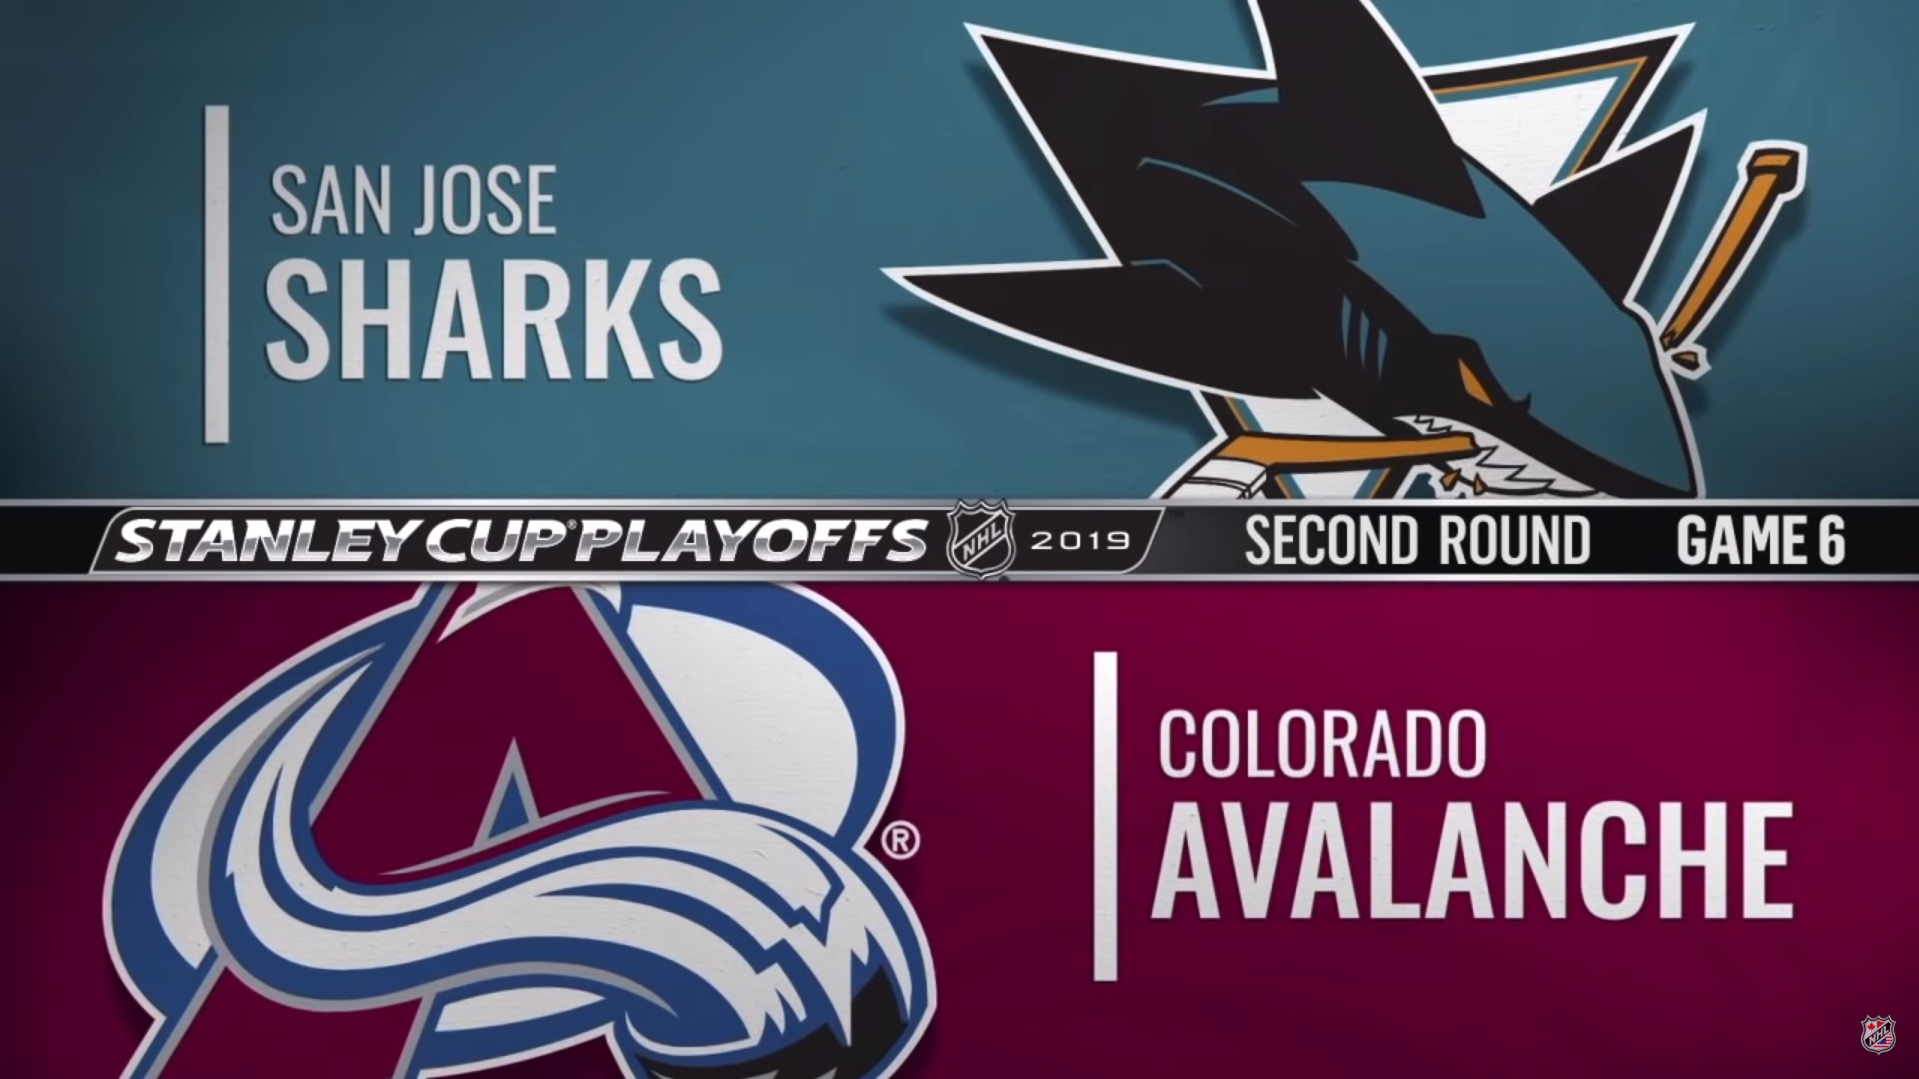 Colorado Avalanche - San Jose Sharks